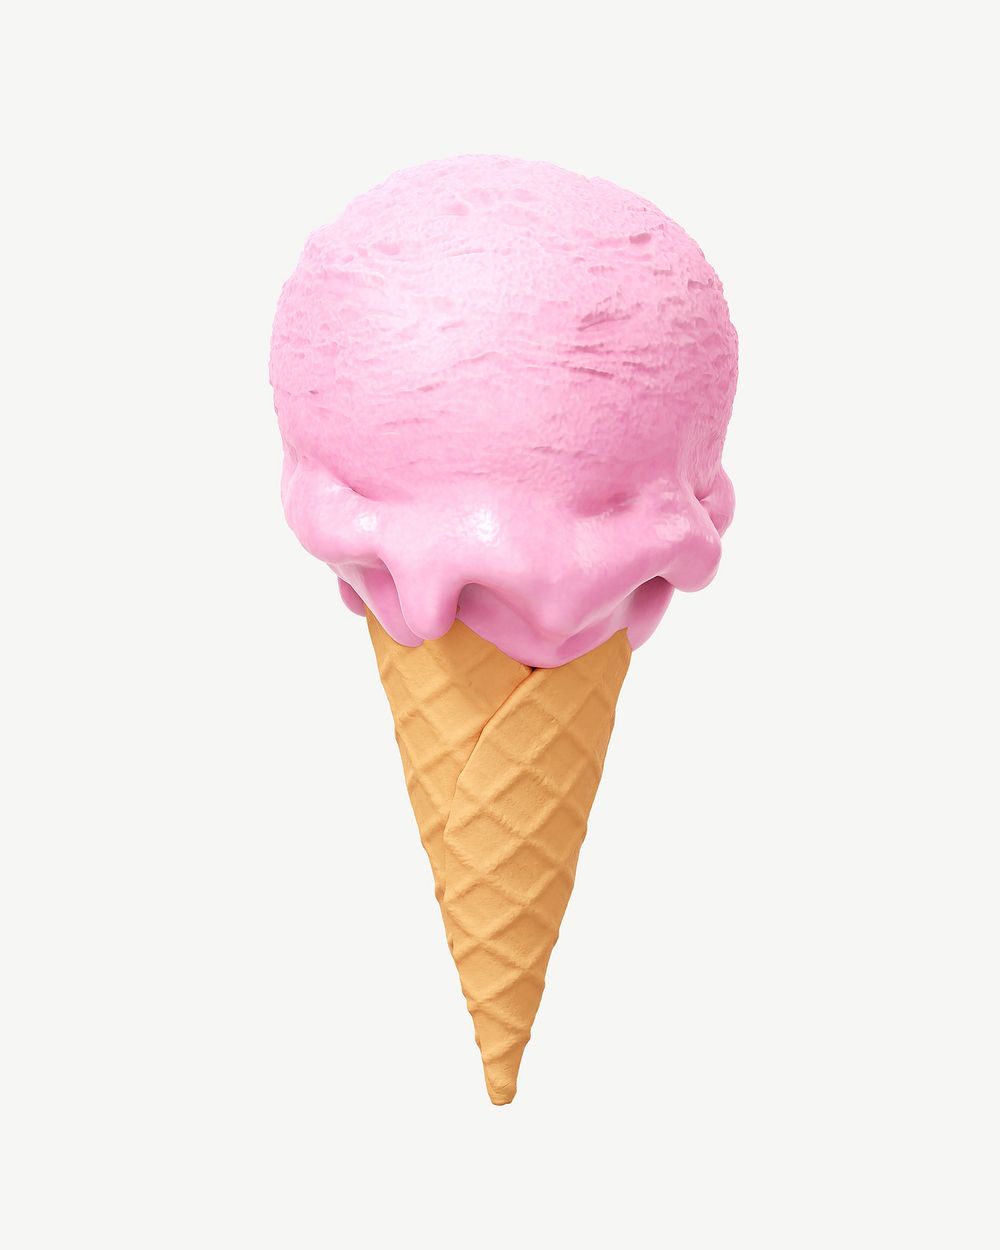 3D strawberry ice-cream cone, collage element psd